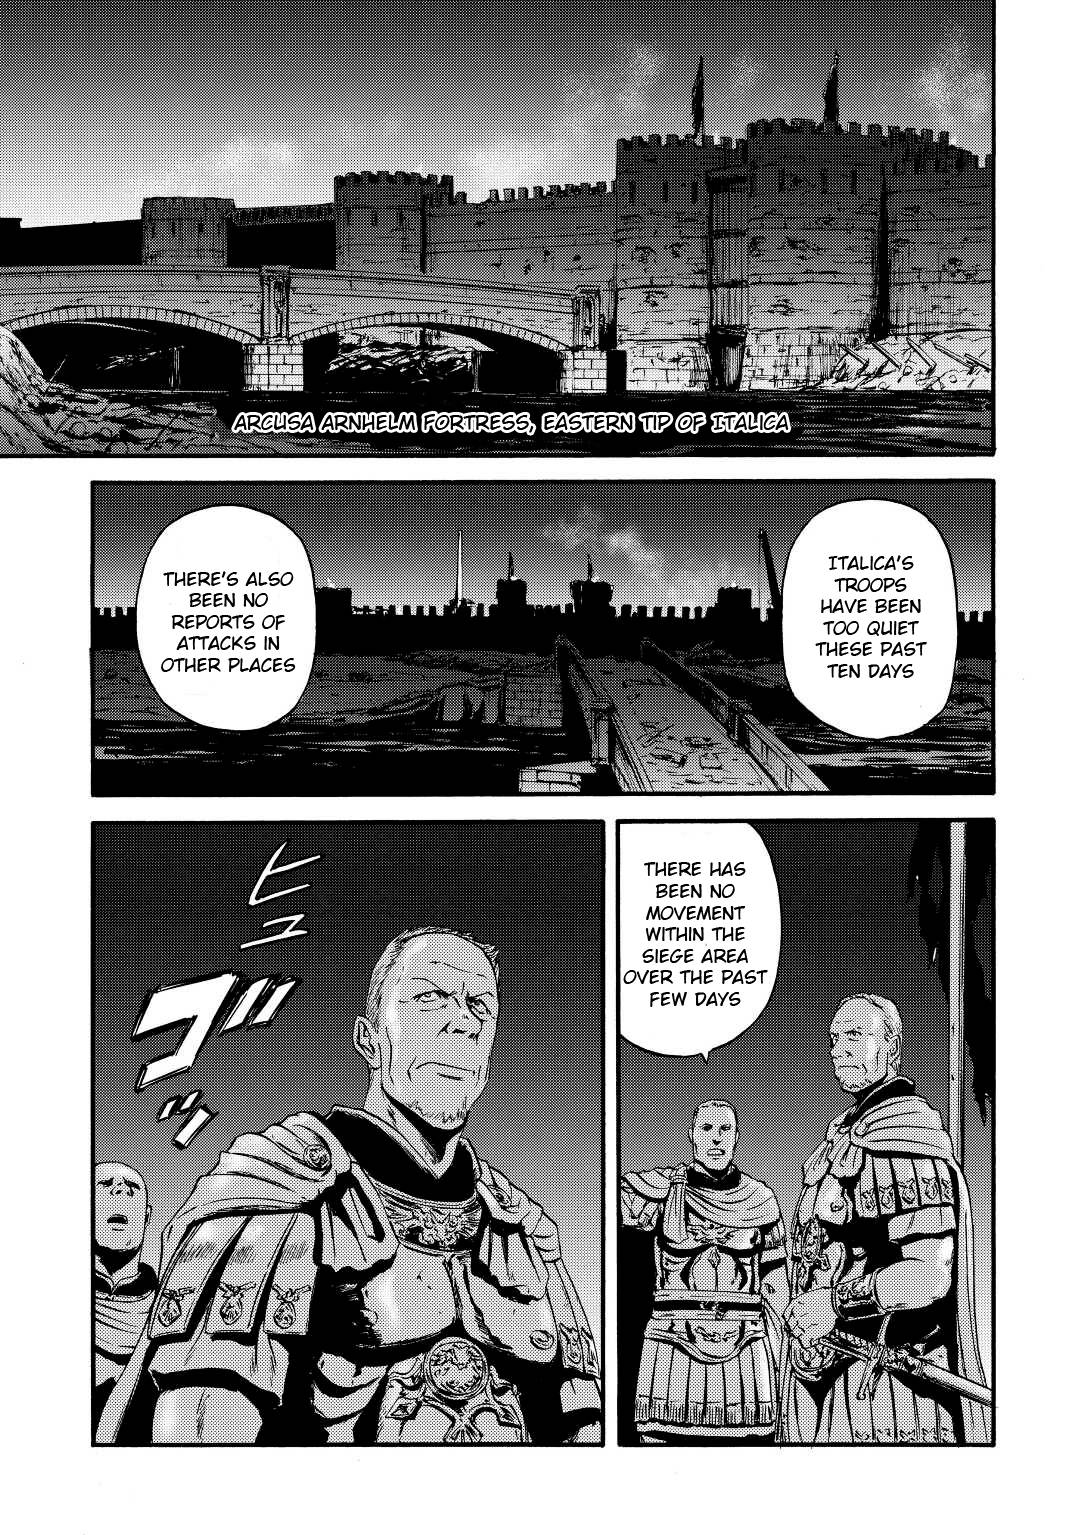 Read Manga Gate – Jietai Kare No Chi Nite, Kaku Tatakeri - Chapter 15